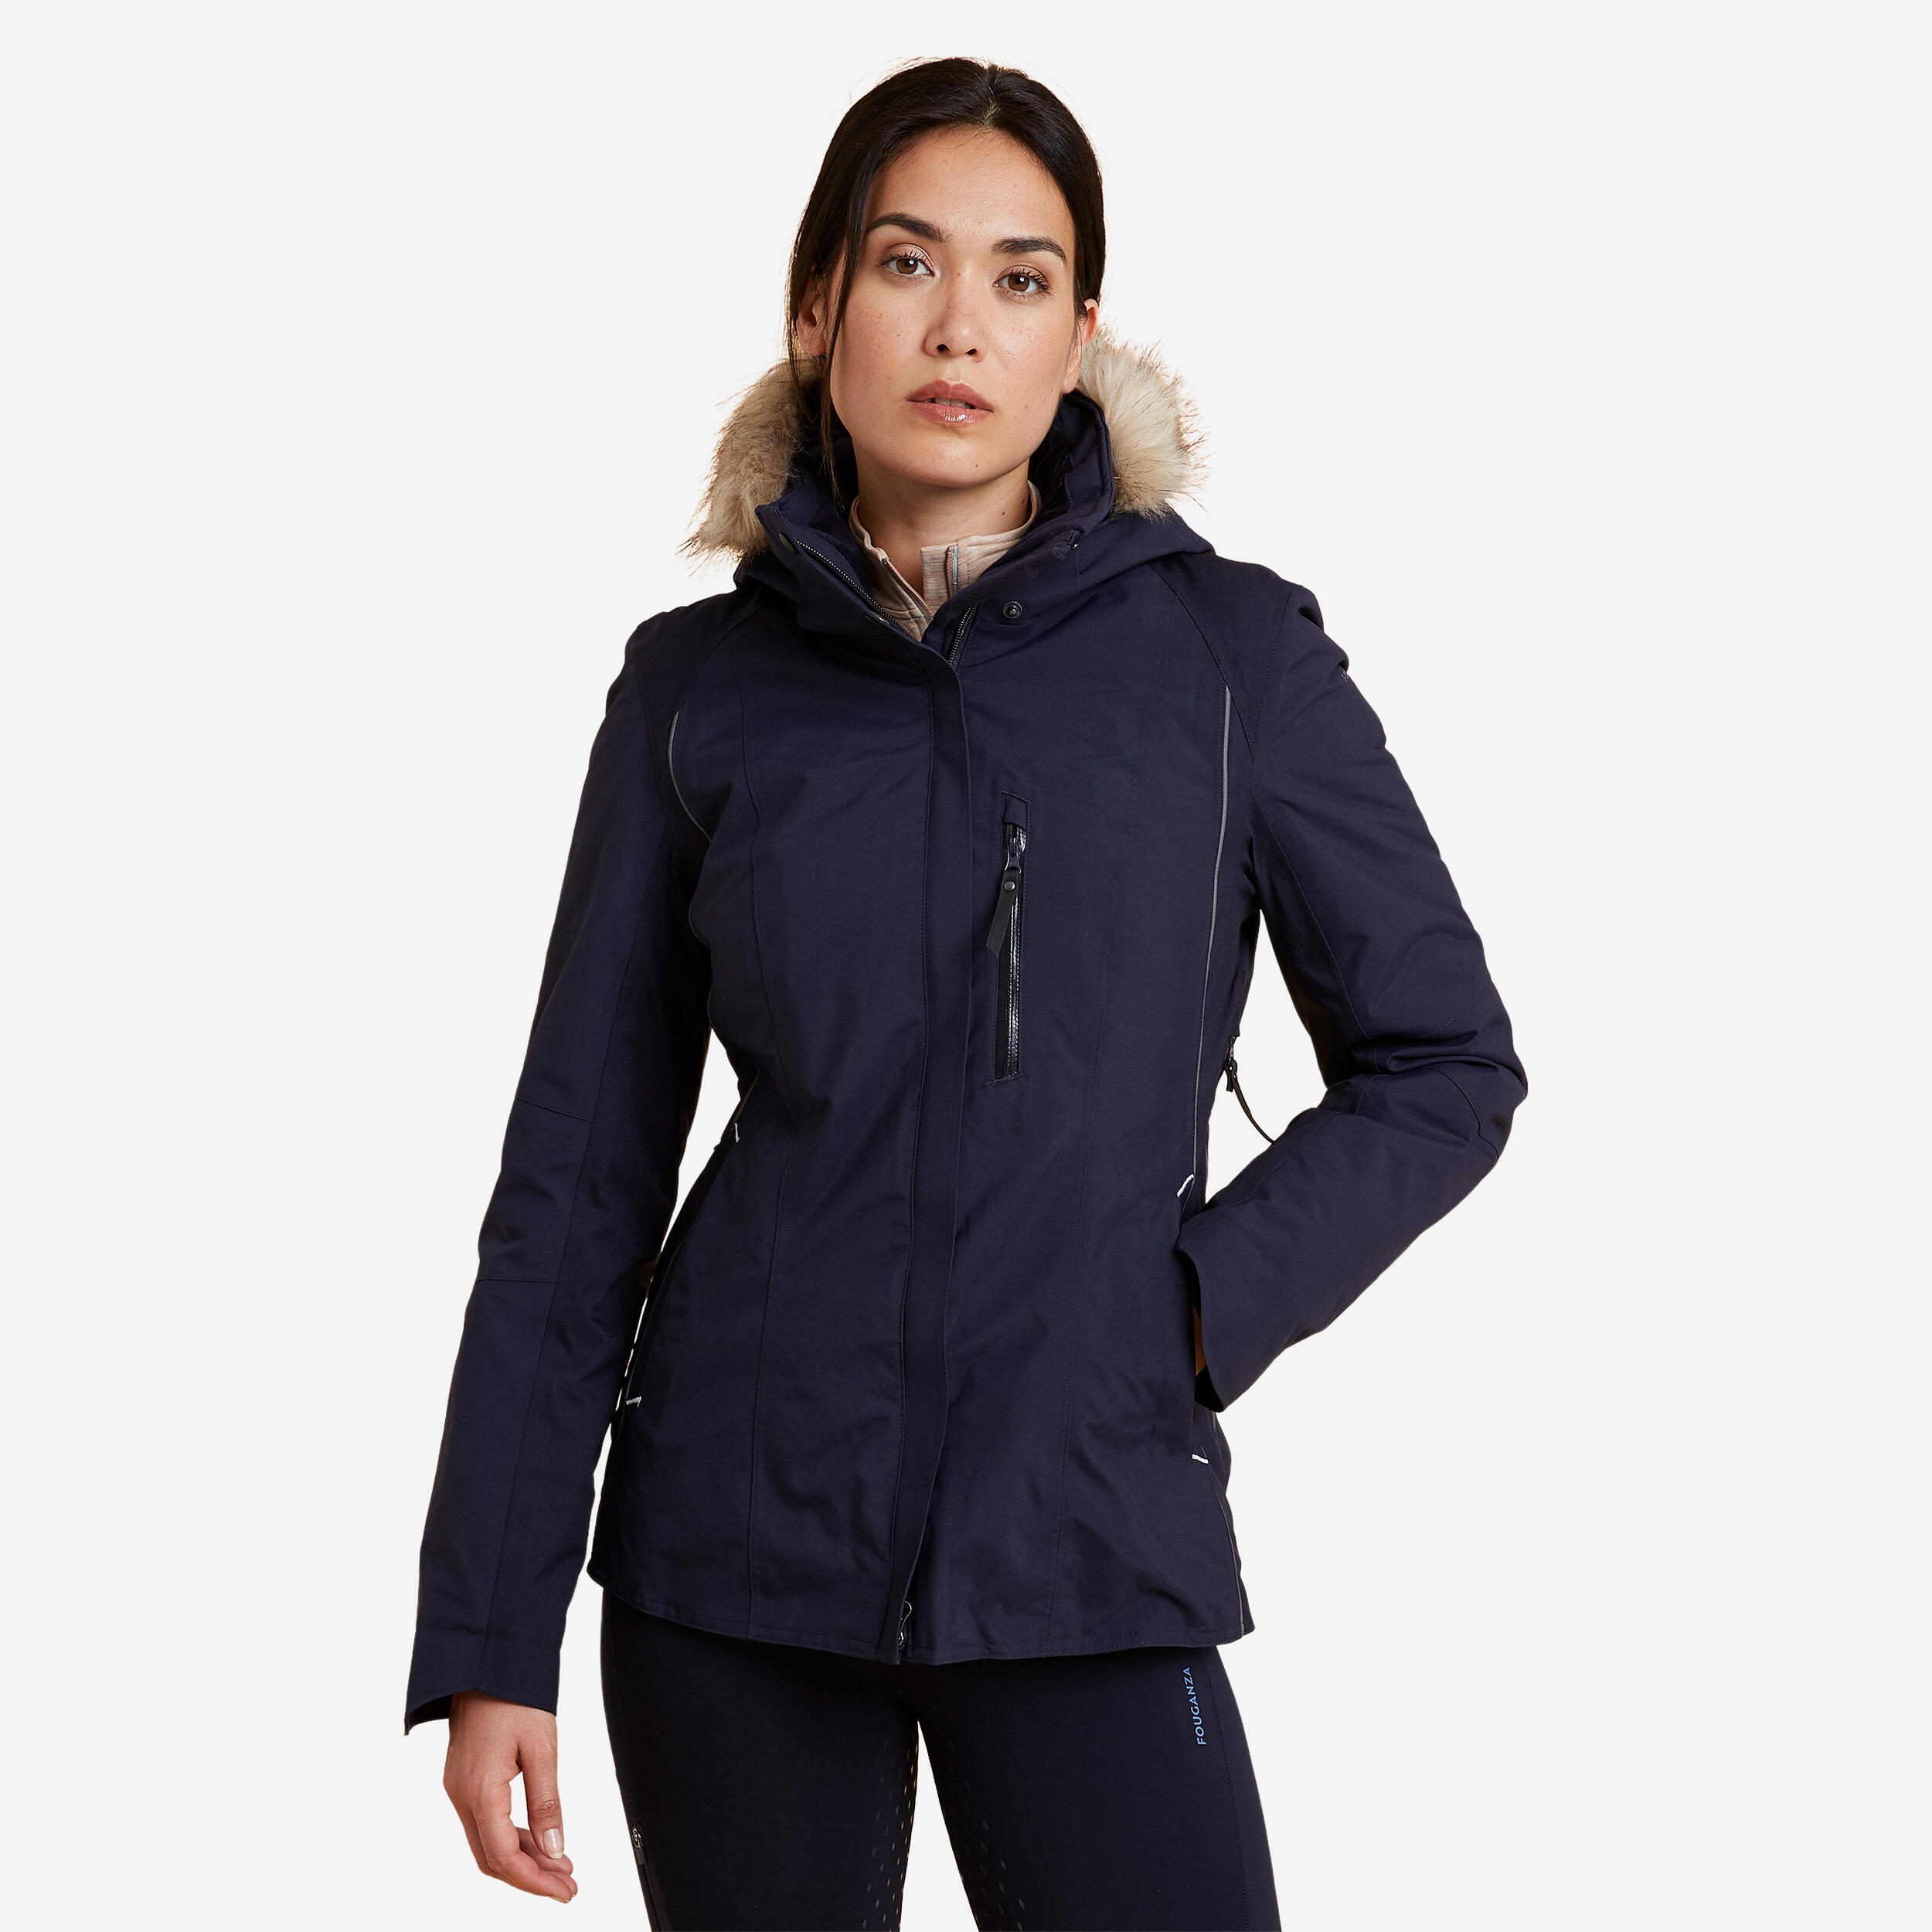 Women Travel Waterproof 3-in-1 jacket - Travel 100 0° - Navy